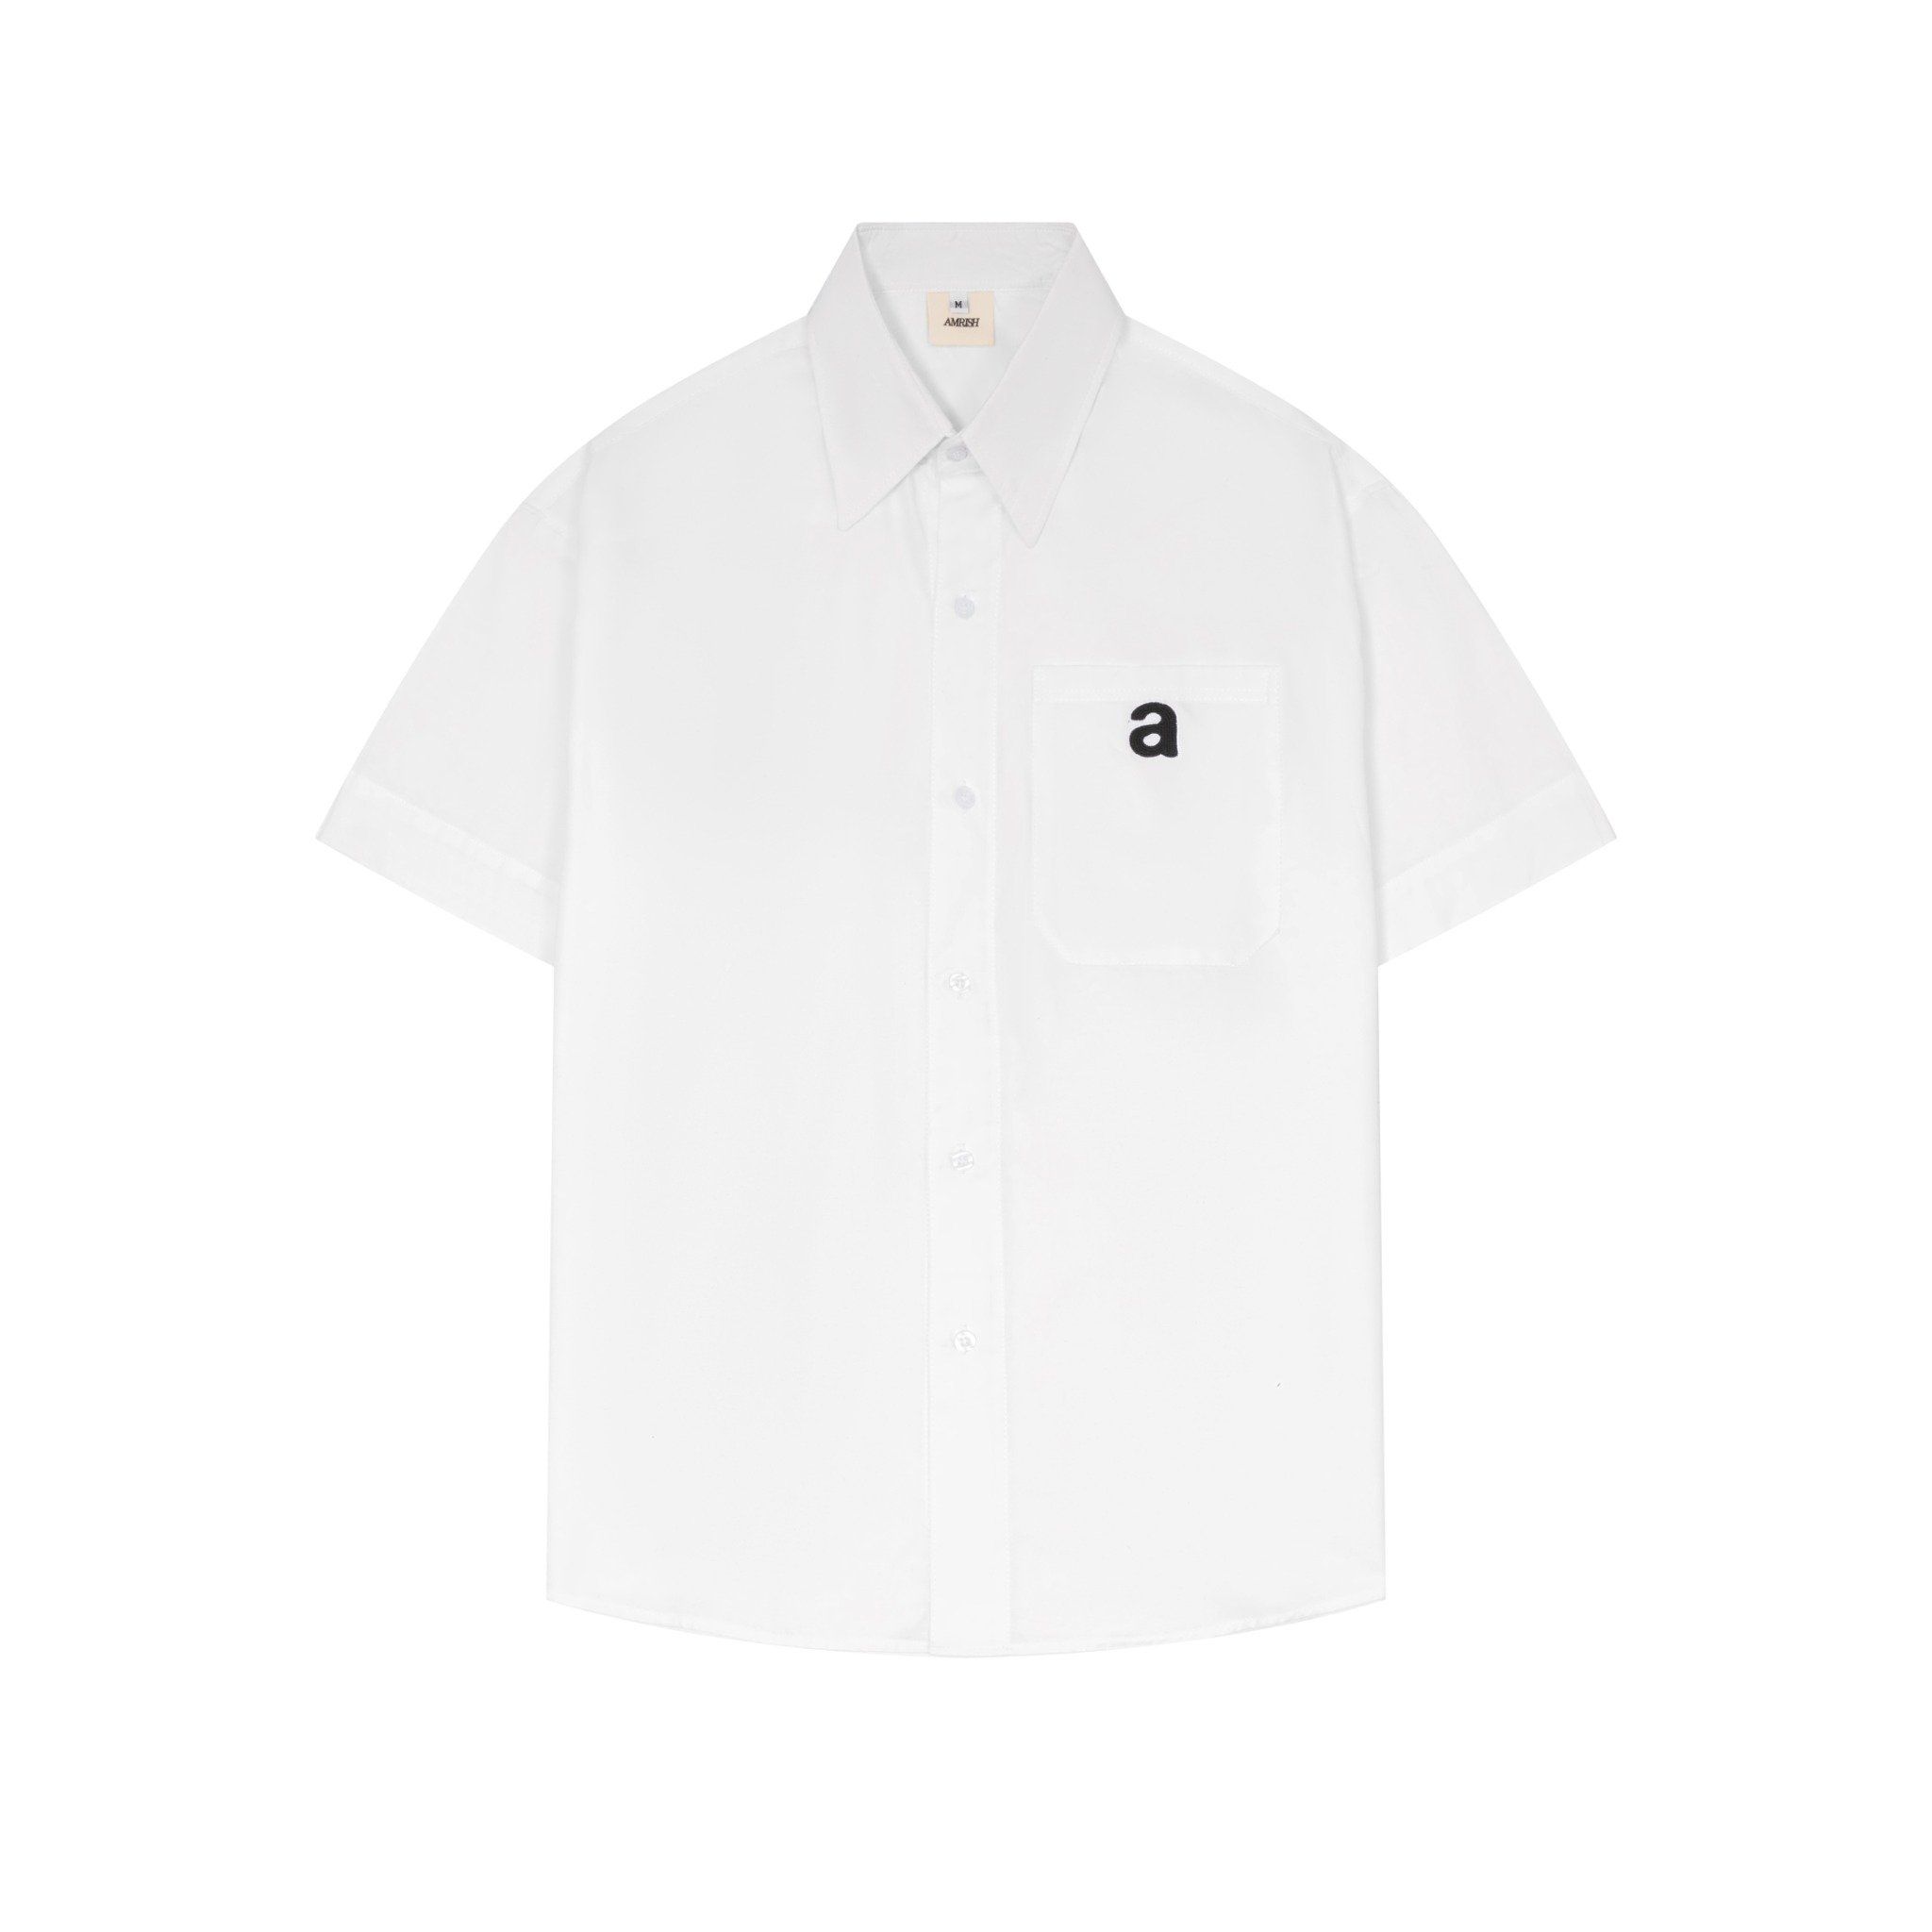  Premium Oxford Short Sleeves Shirt - White 